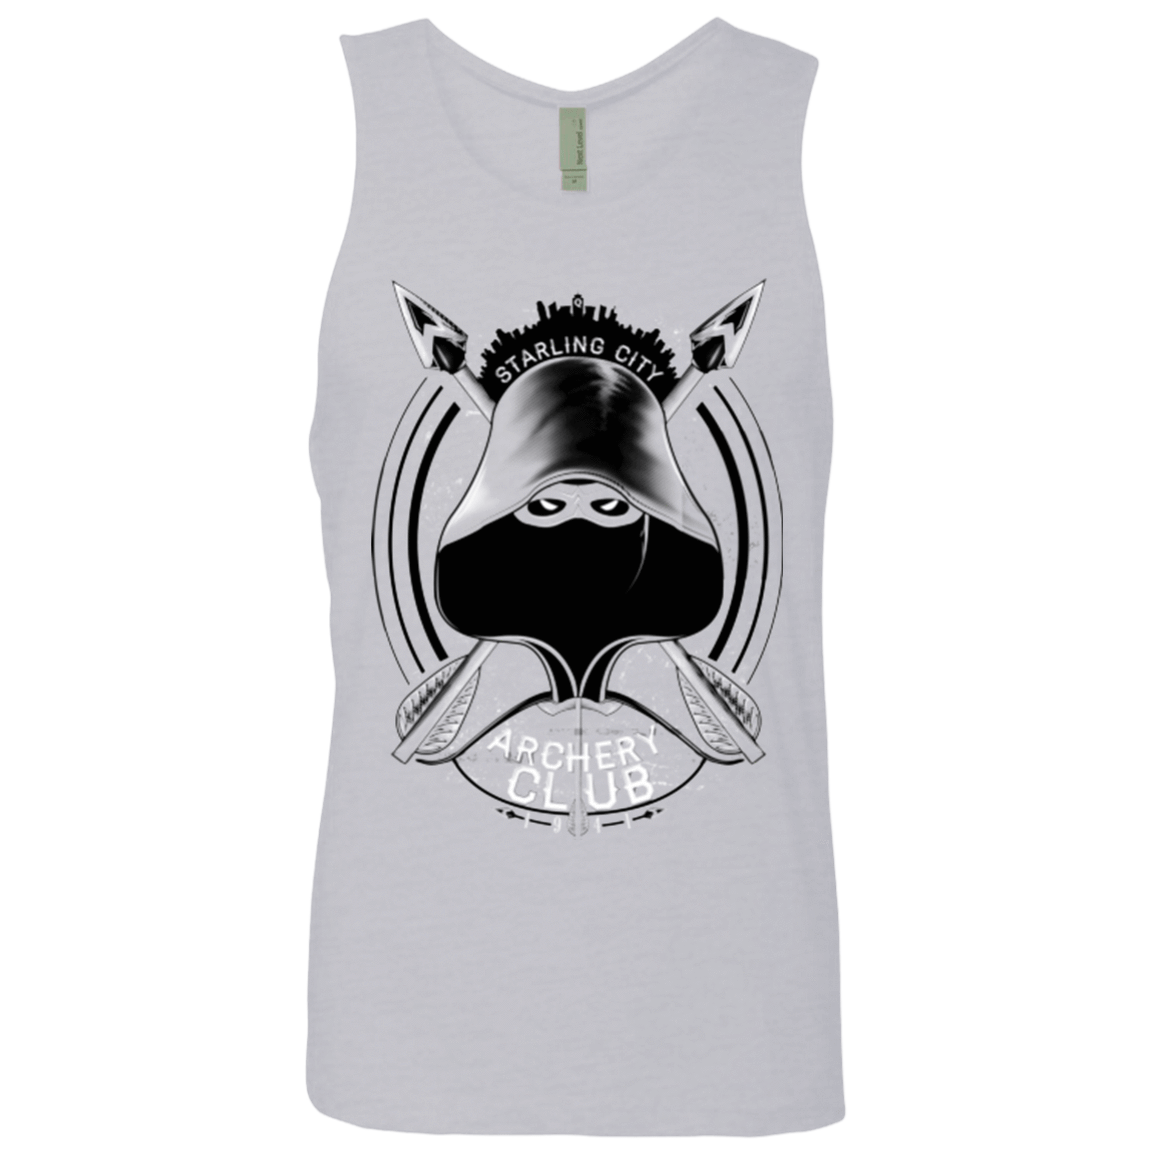 T-Shirts Heather Grey / Small Archery Club Men's Premium Tank Top